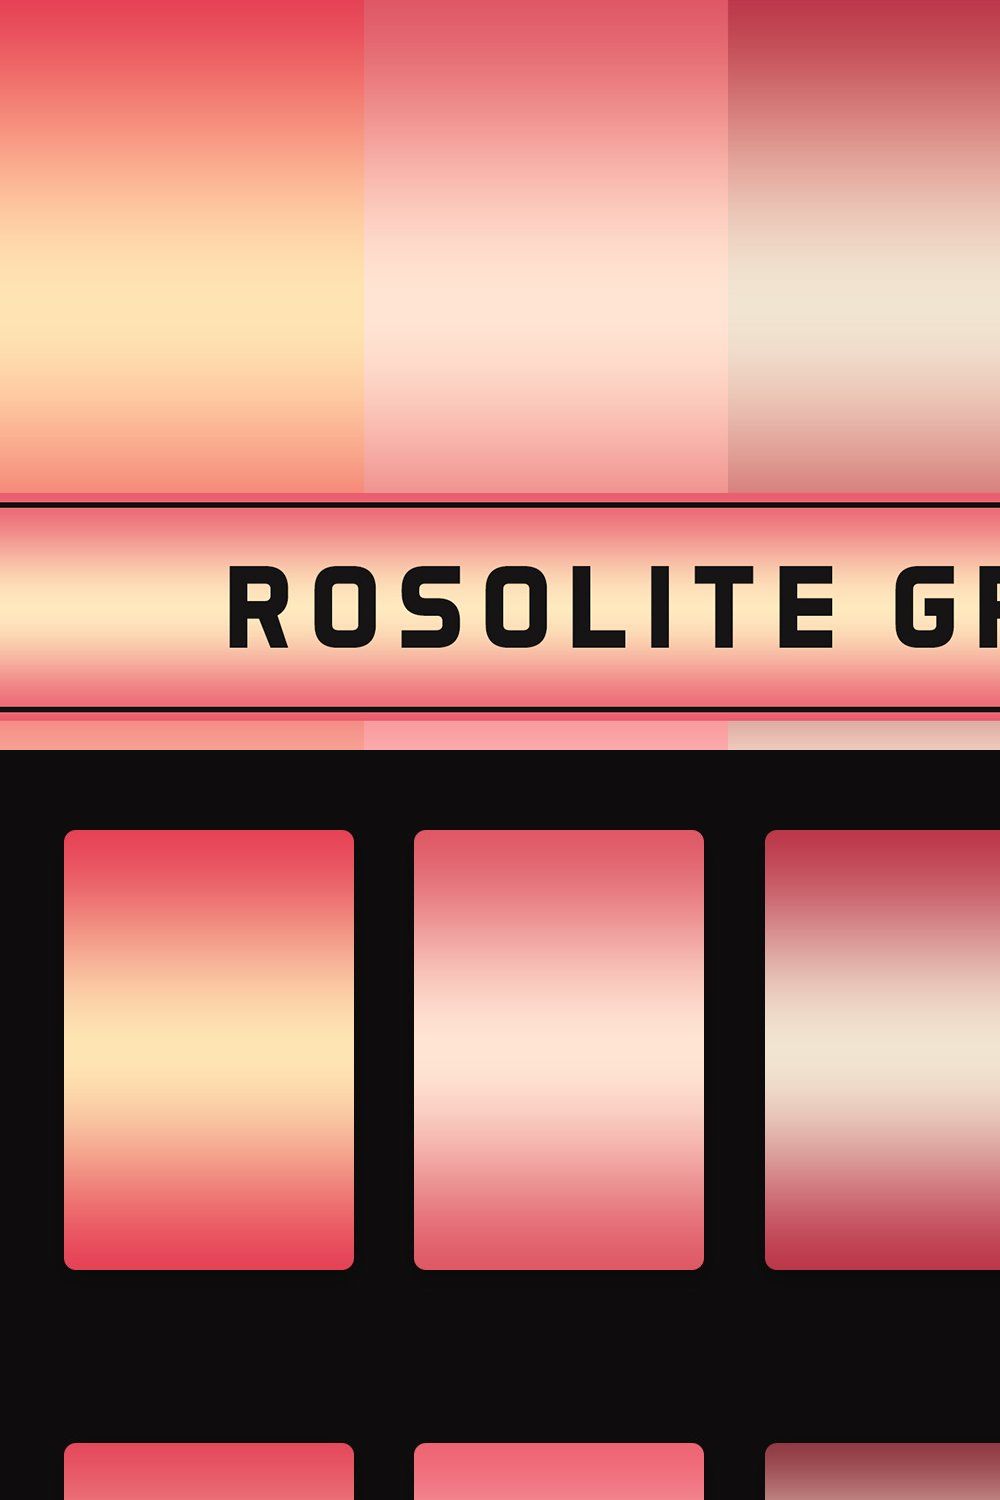 Rosolite Gradients pinterest preview image.